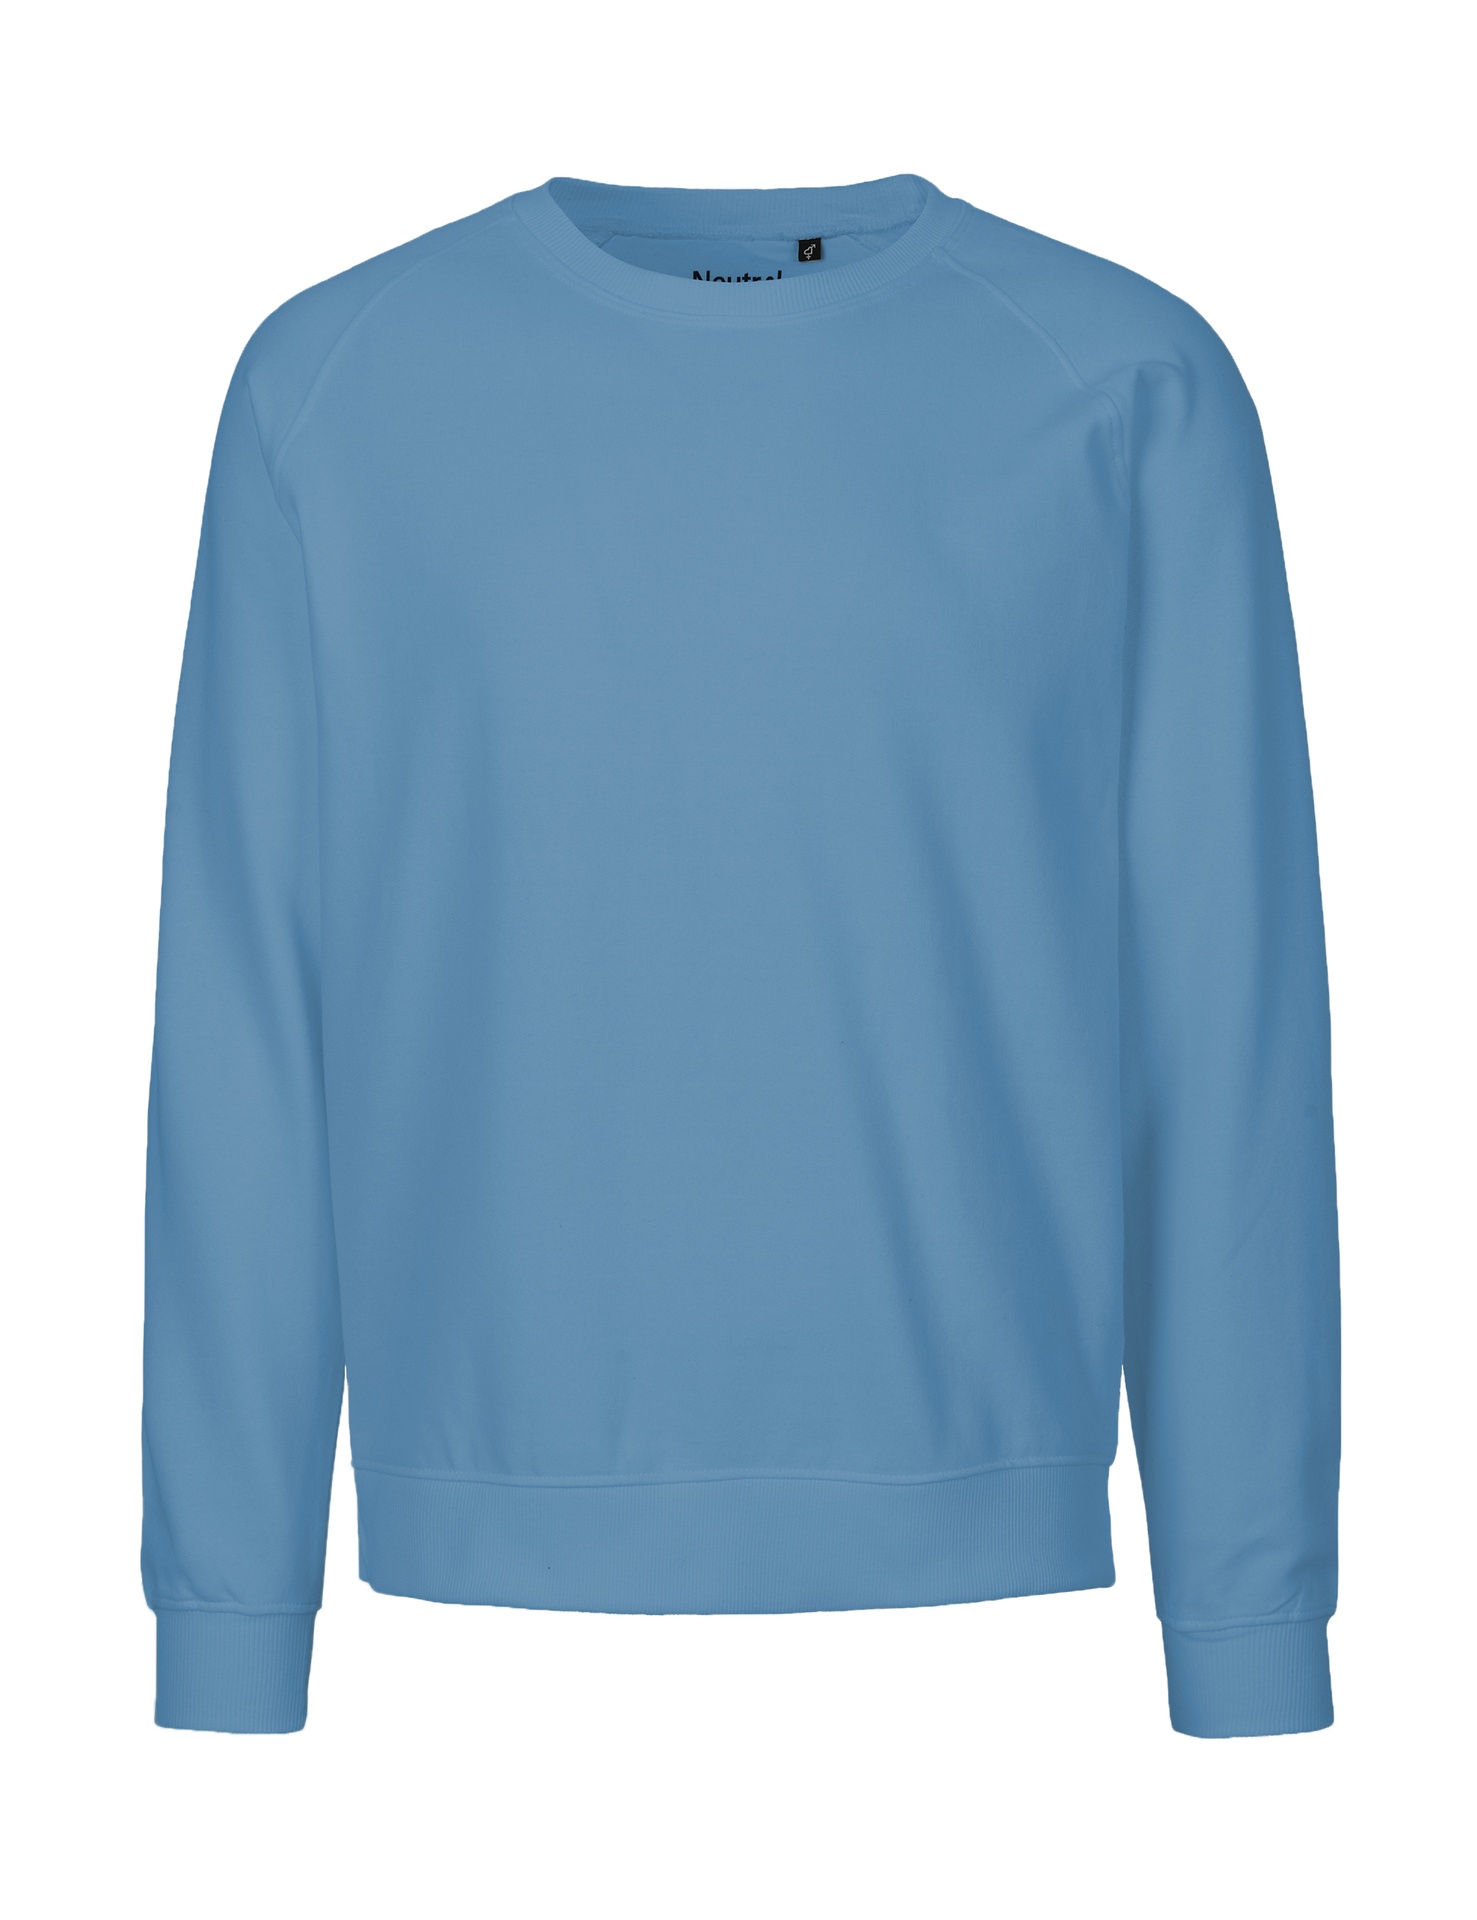 [PR/02836] Unisex Sweatshirt (Dusty Indigo 41, XL)